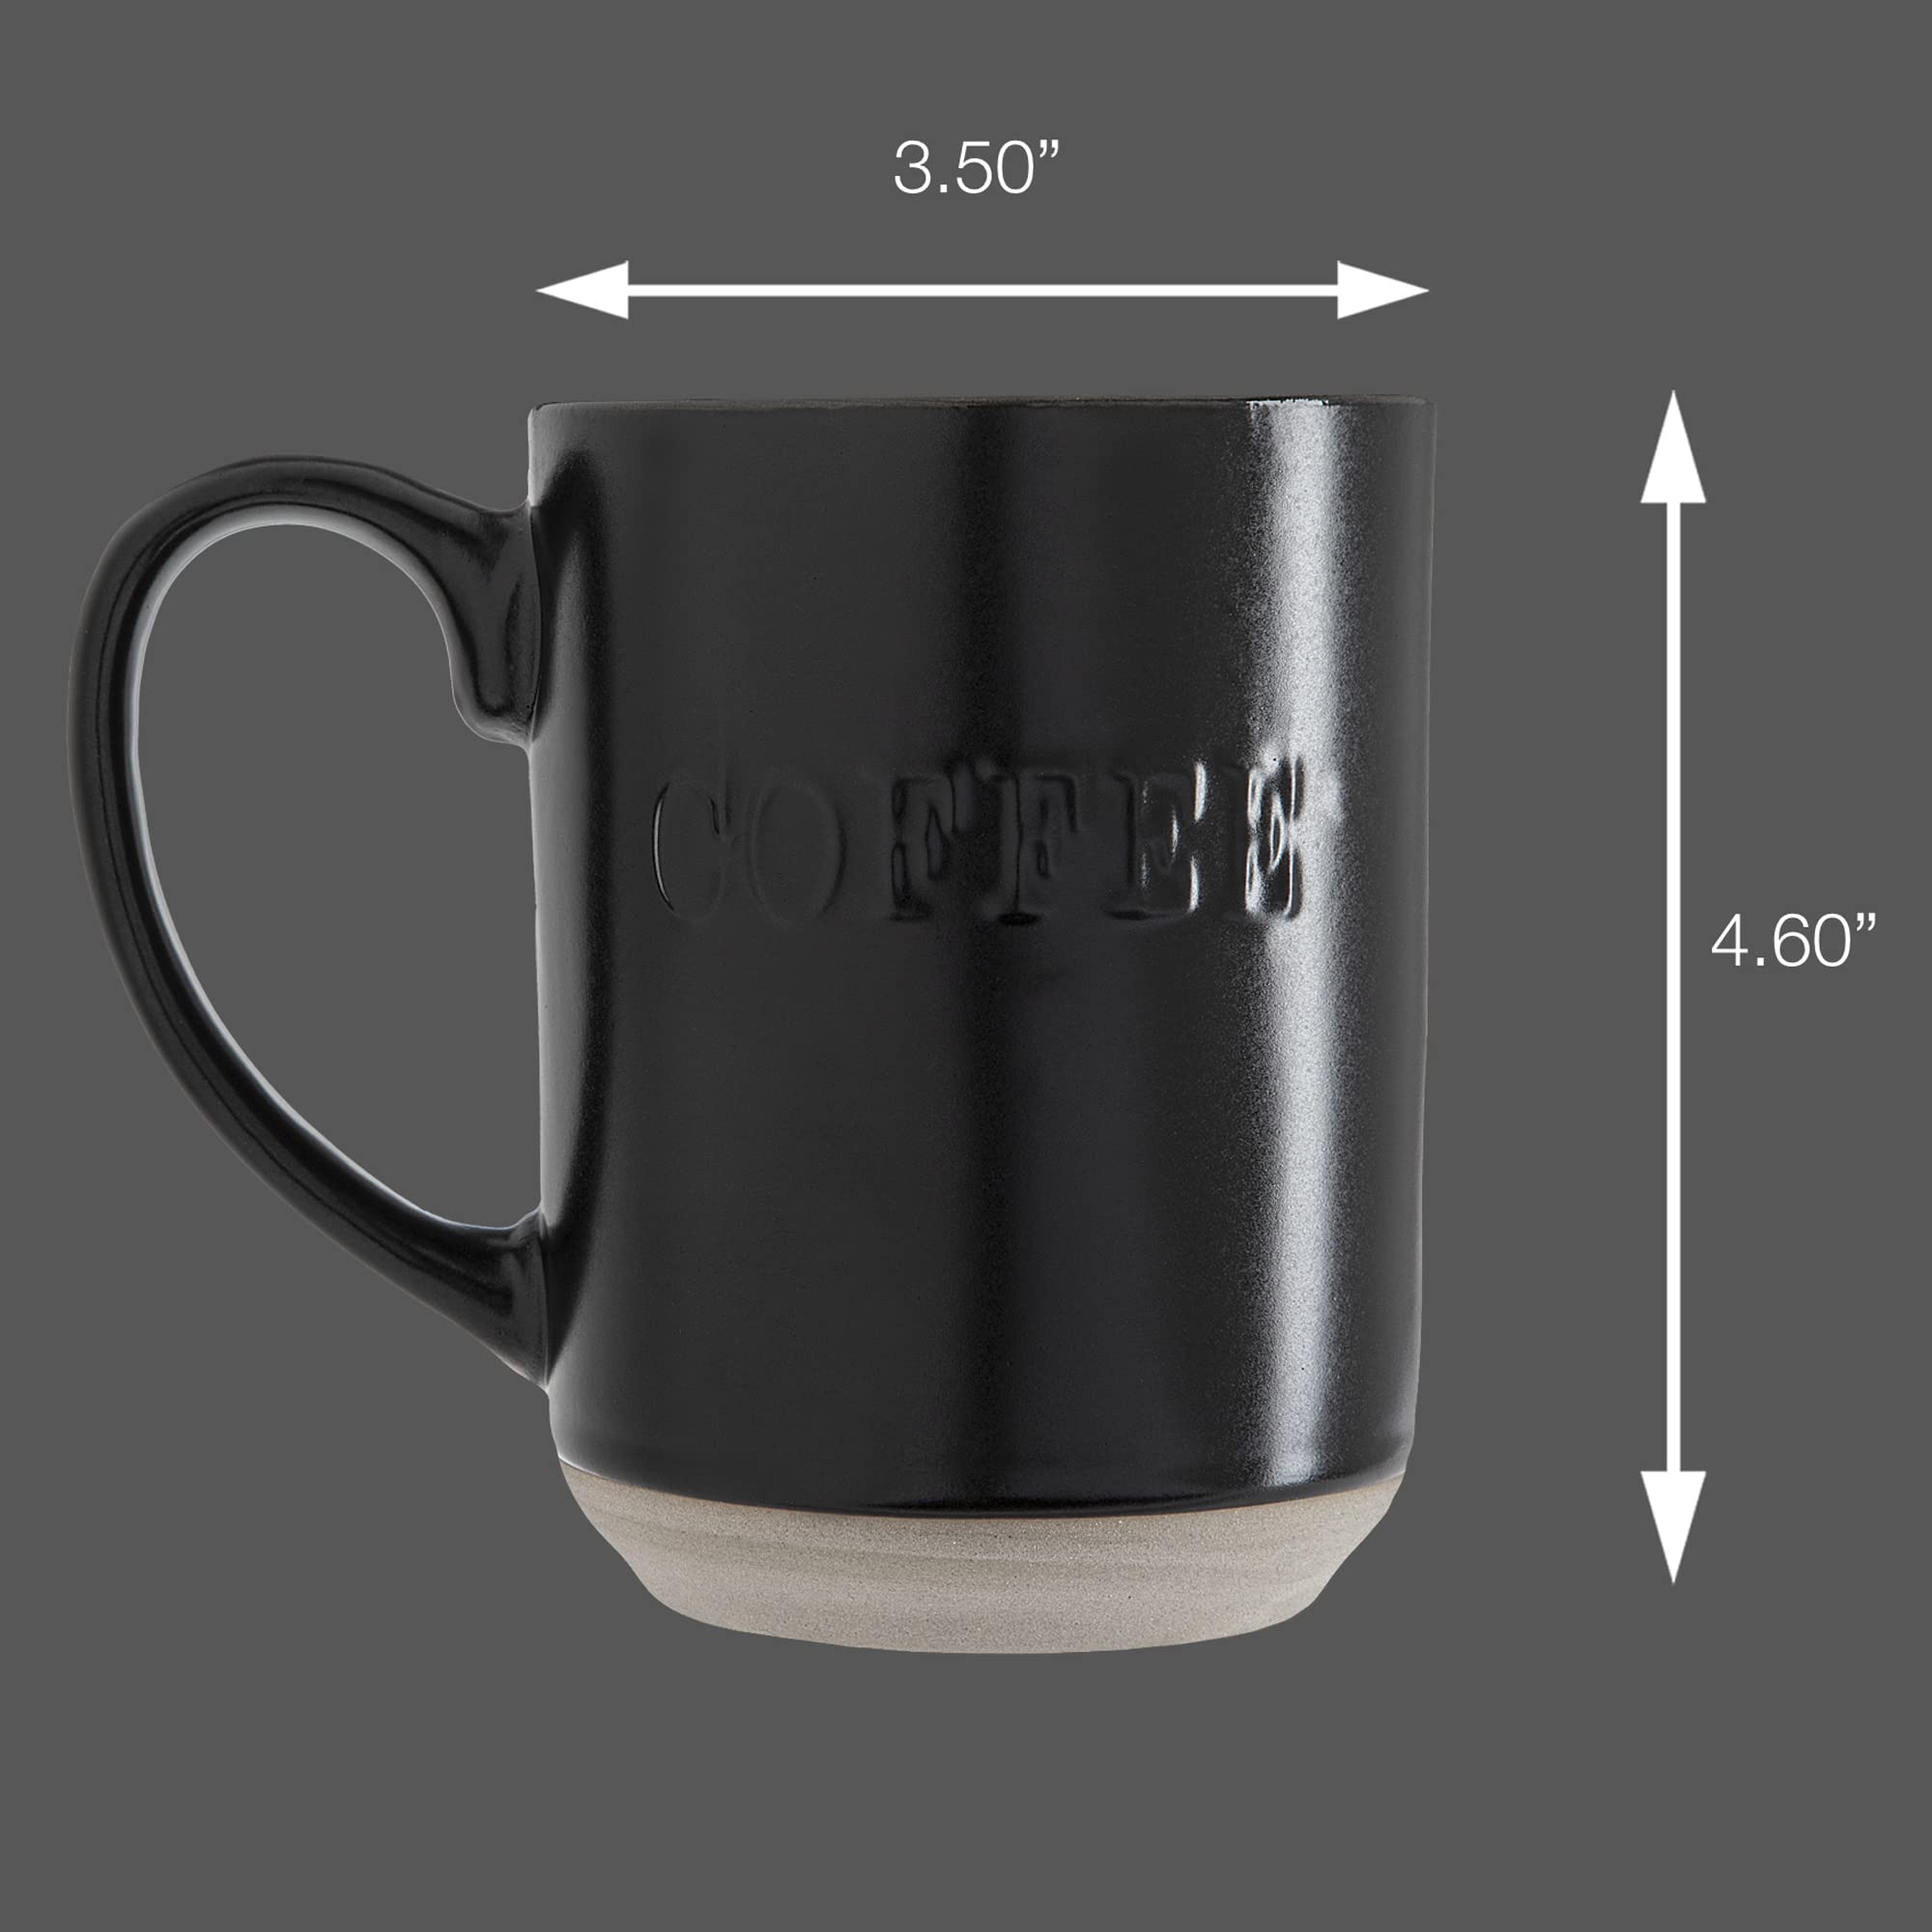 Sheffield Home Set of Stoneware Coffee Mugs- 4 Printed Coffee Cups, Tea Cups, Latte Mugs 16 oz  - Like New